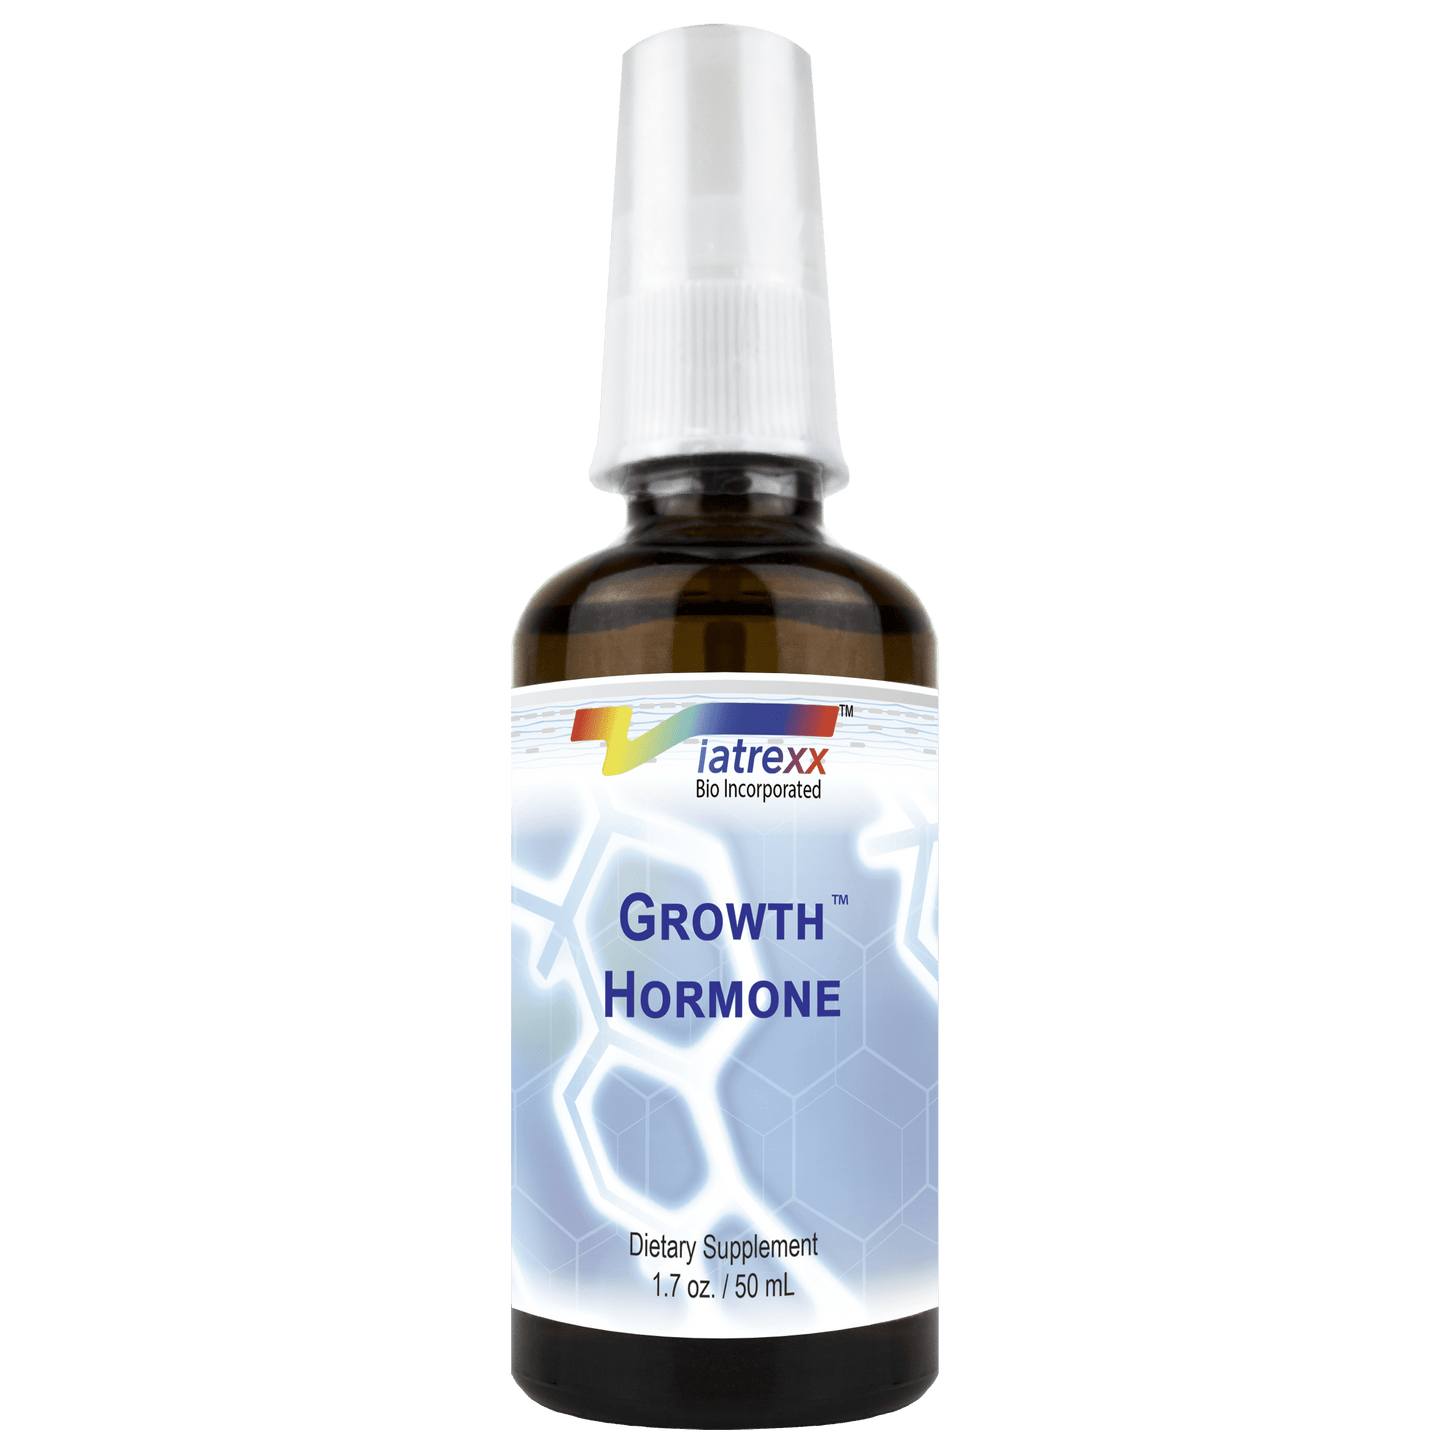 Growth Hormone by Viatrexx